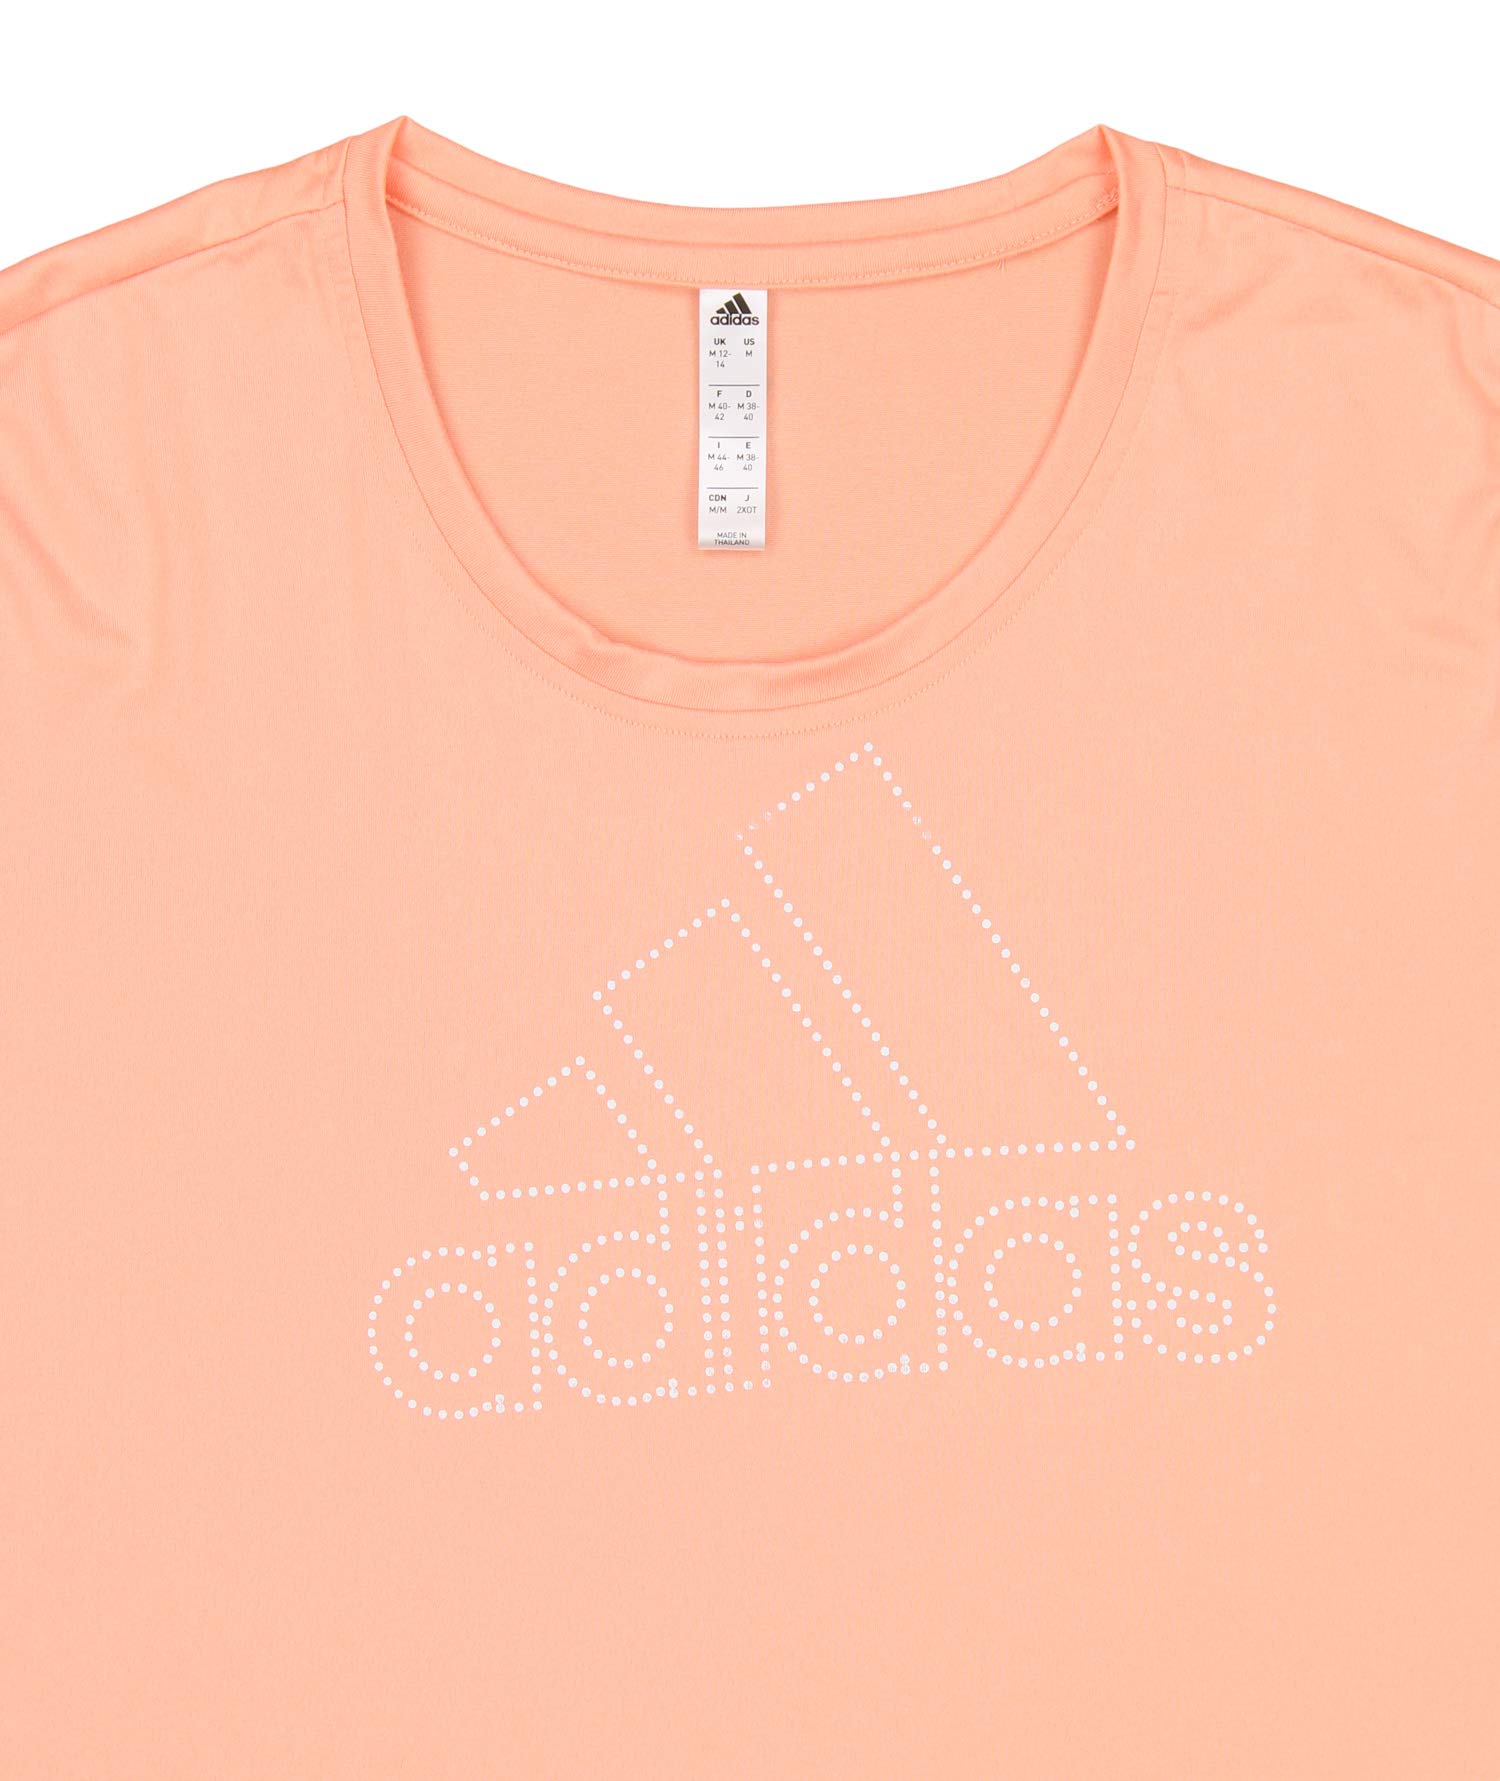 ADIDAS Women's Badge of Sport Graphic Tee, Glow Pink Large